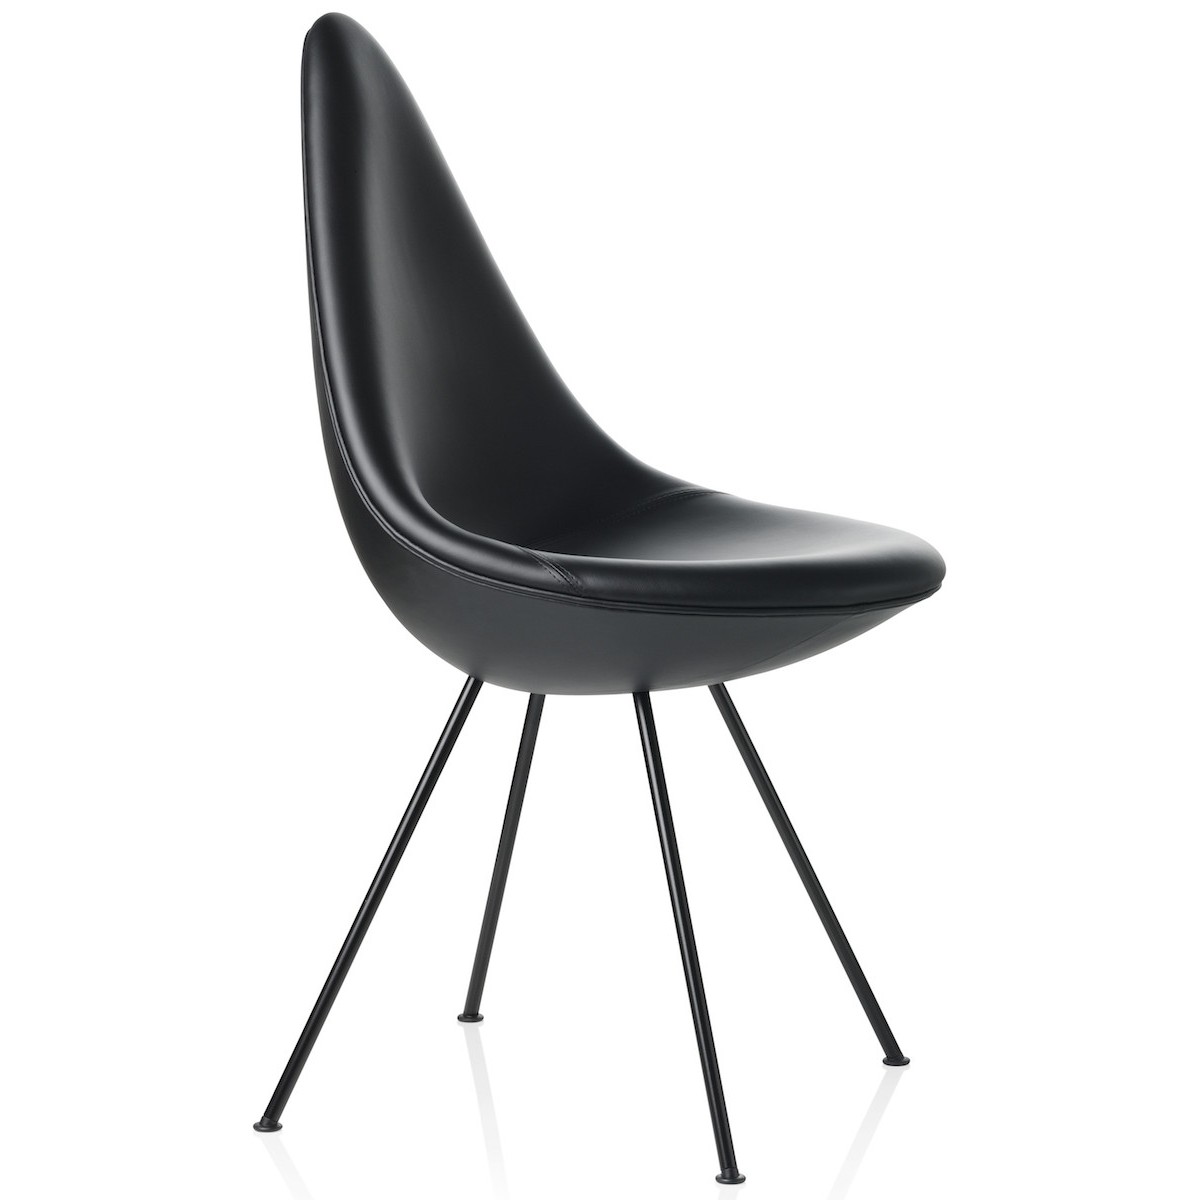 Drop chair - black Essential leather - black legs